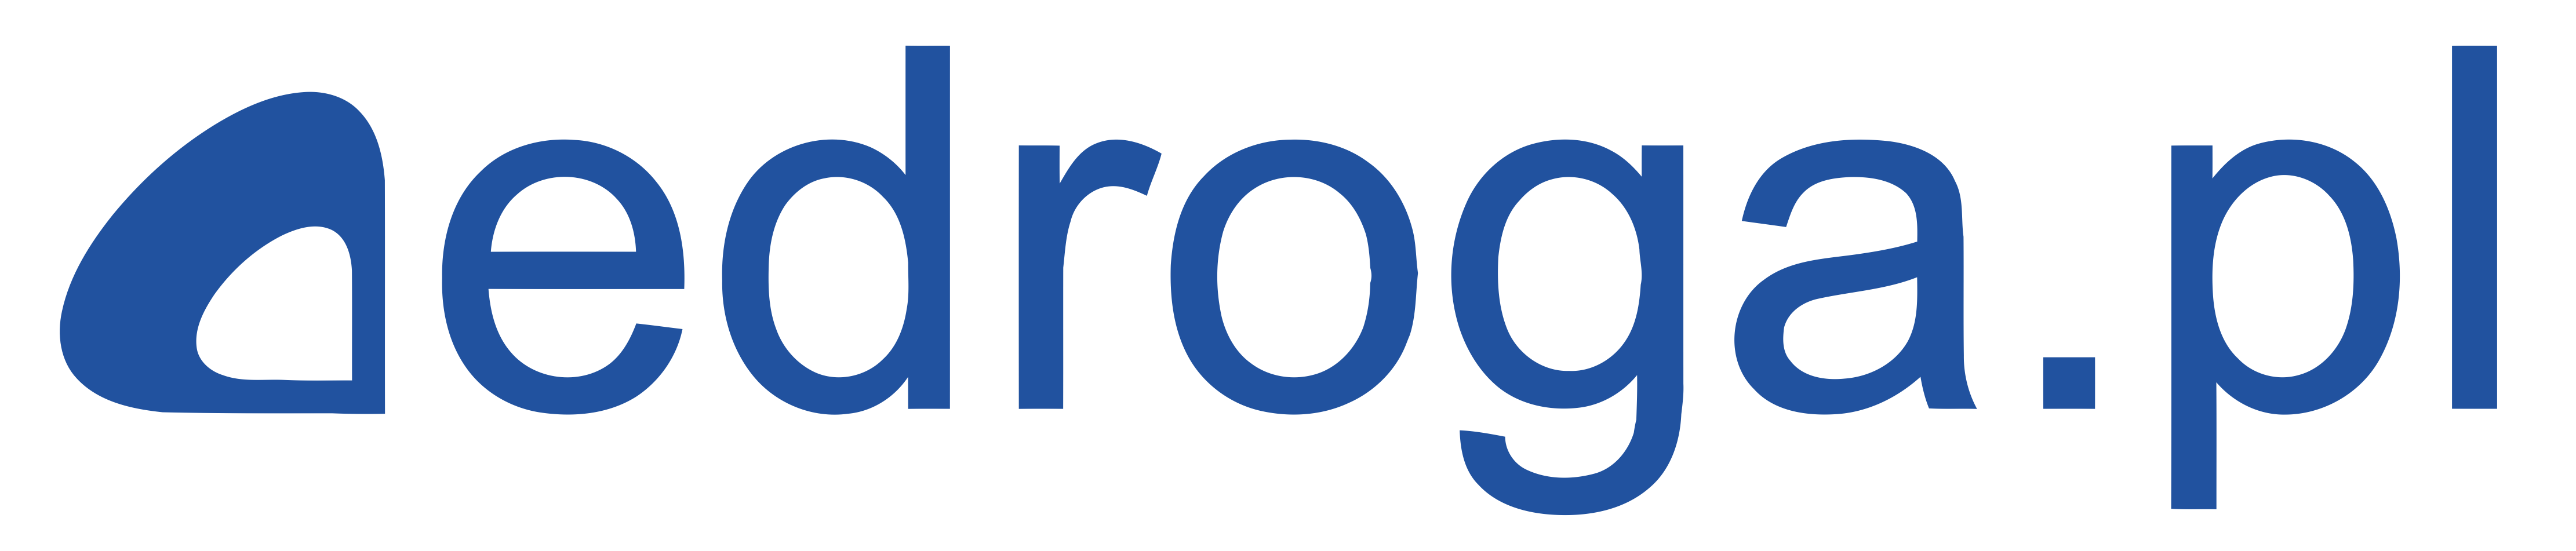 Logotyp Edroga vectorized